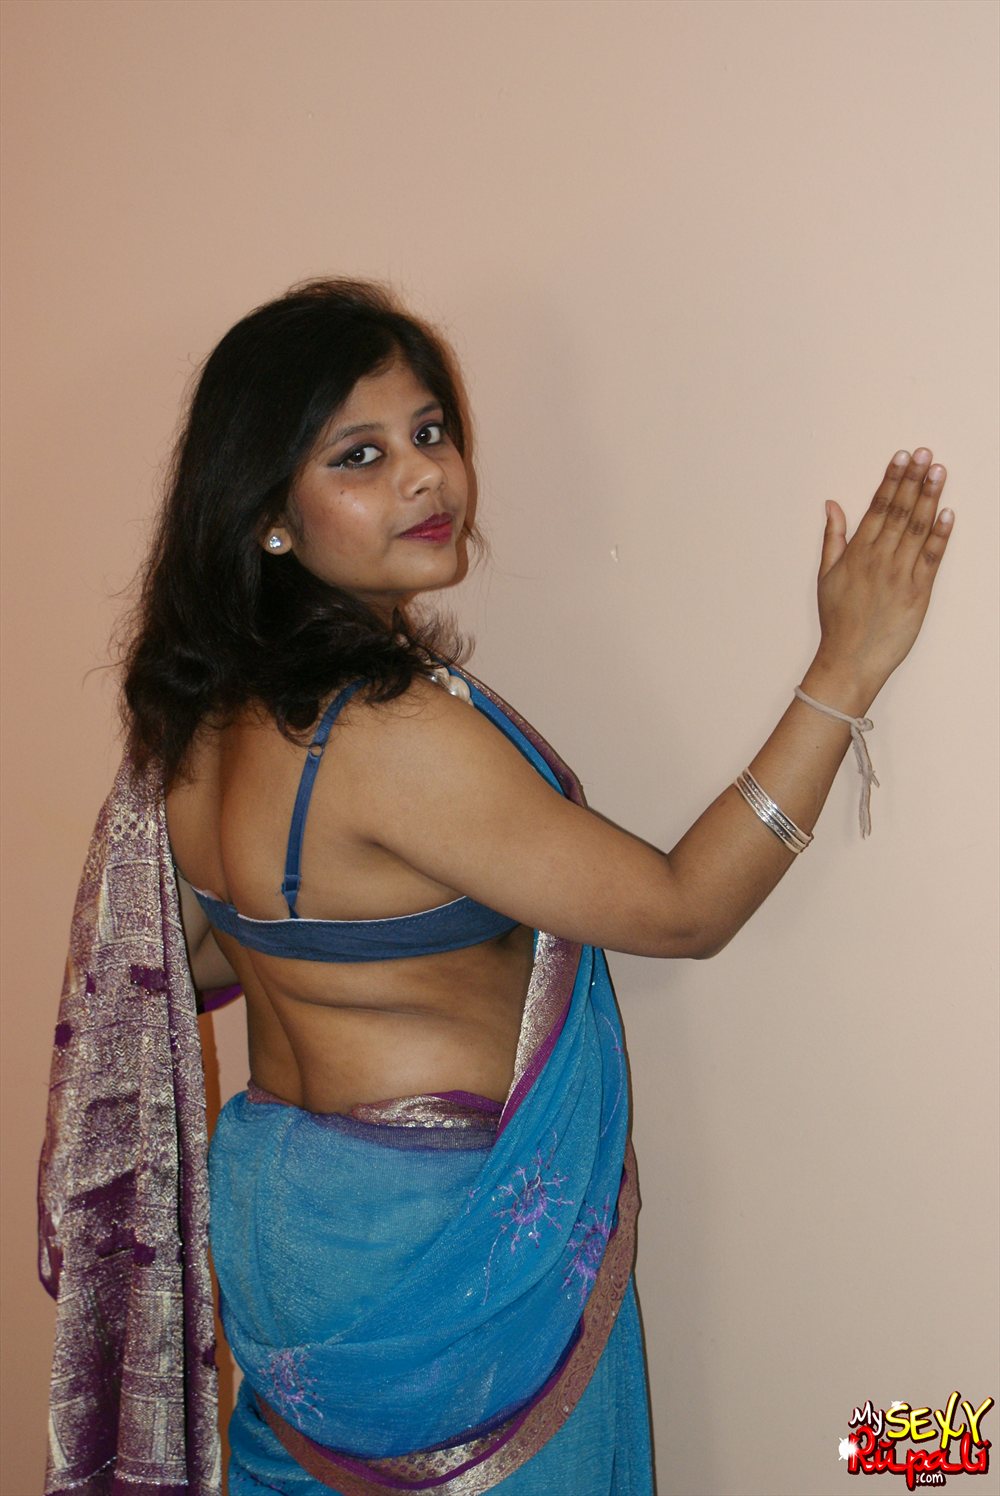 My Sexy Rupali Rupali Giving Blowjob To Ramesh My Sexy Rupali ...